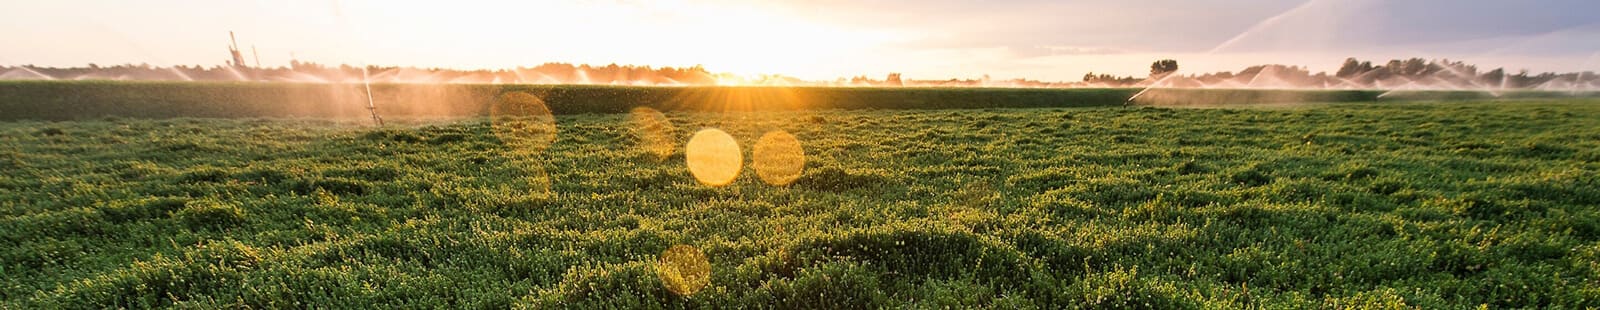 Sun rising over a Wisconsin field